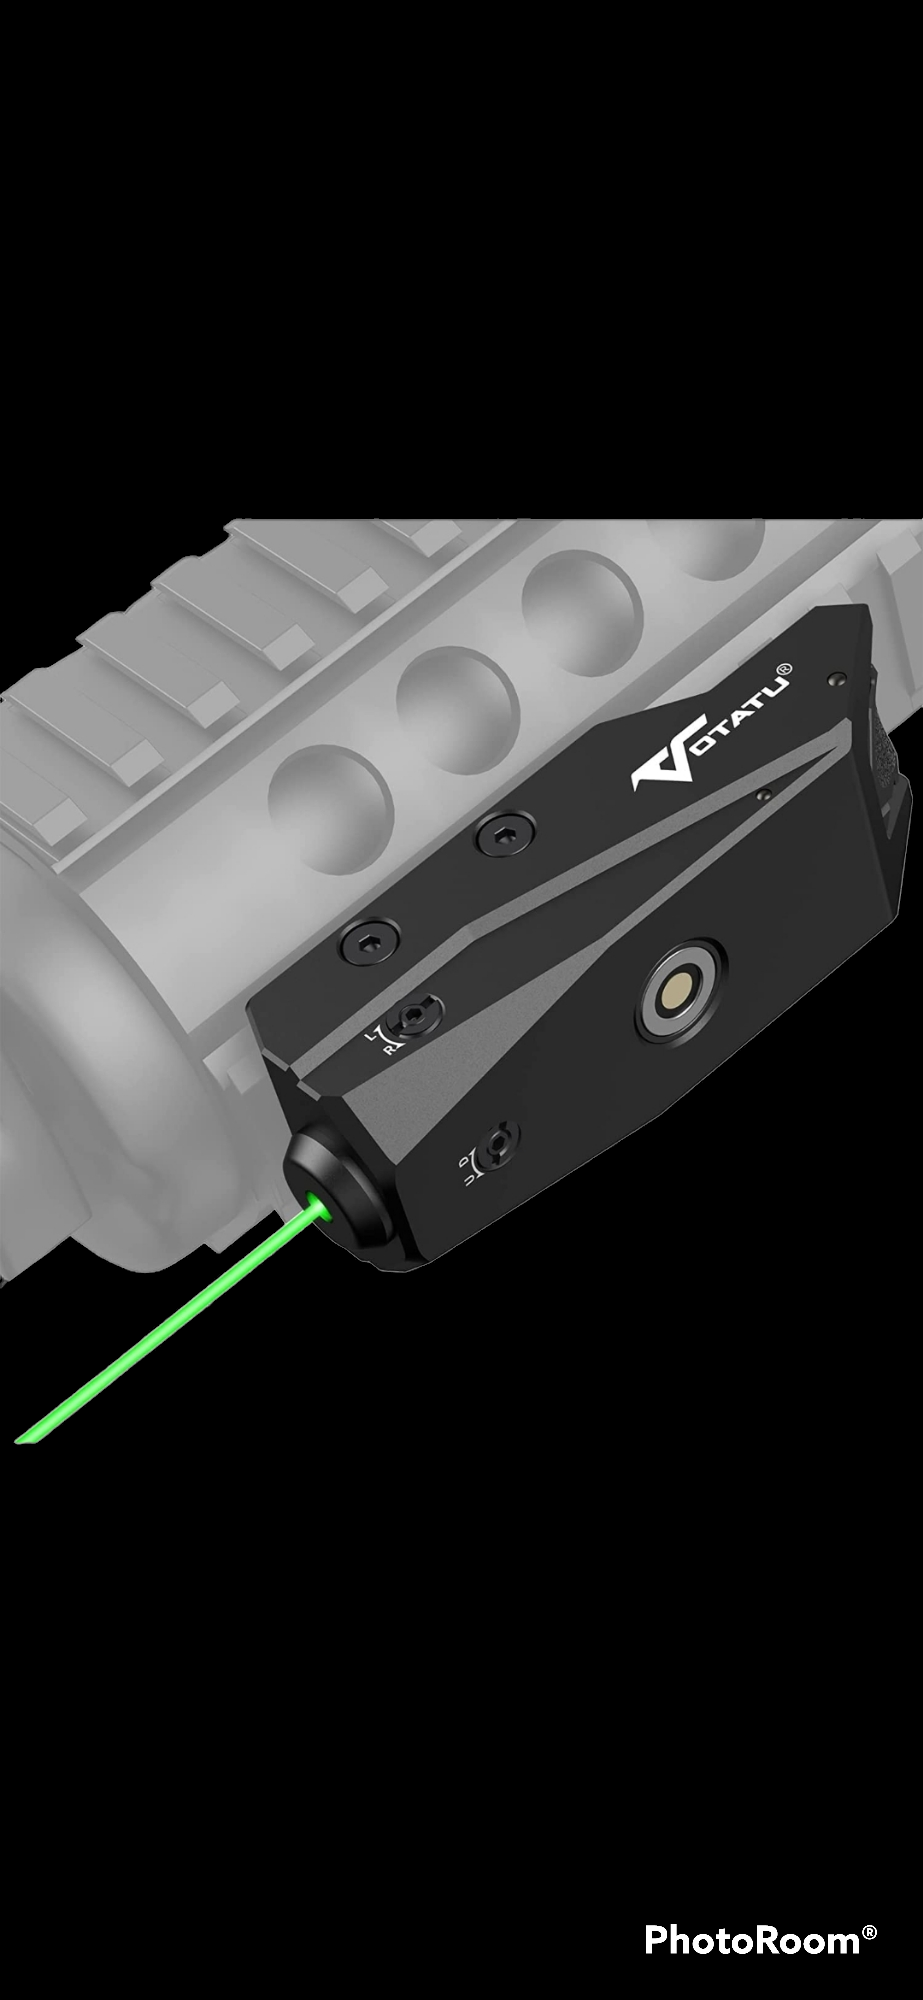 Votatu Picatiny laser for AR's